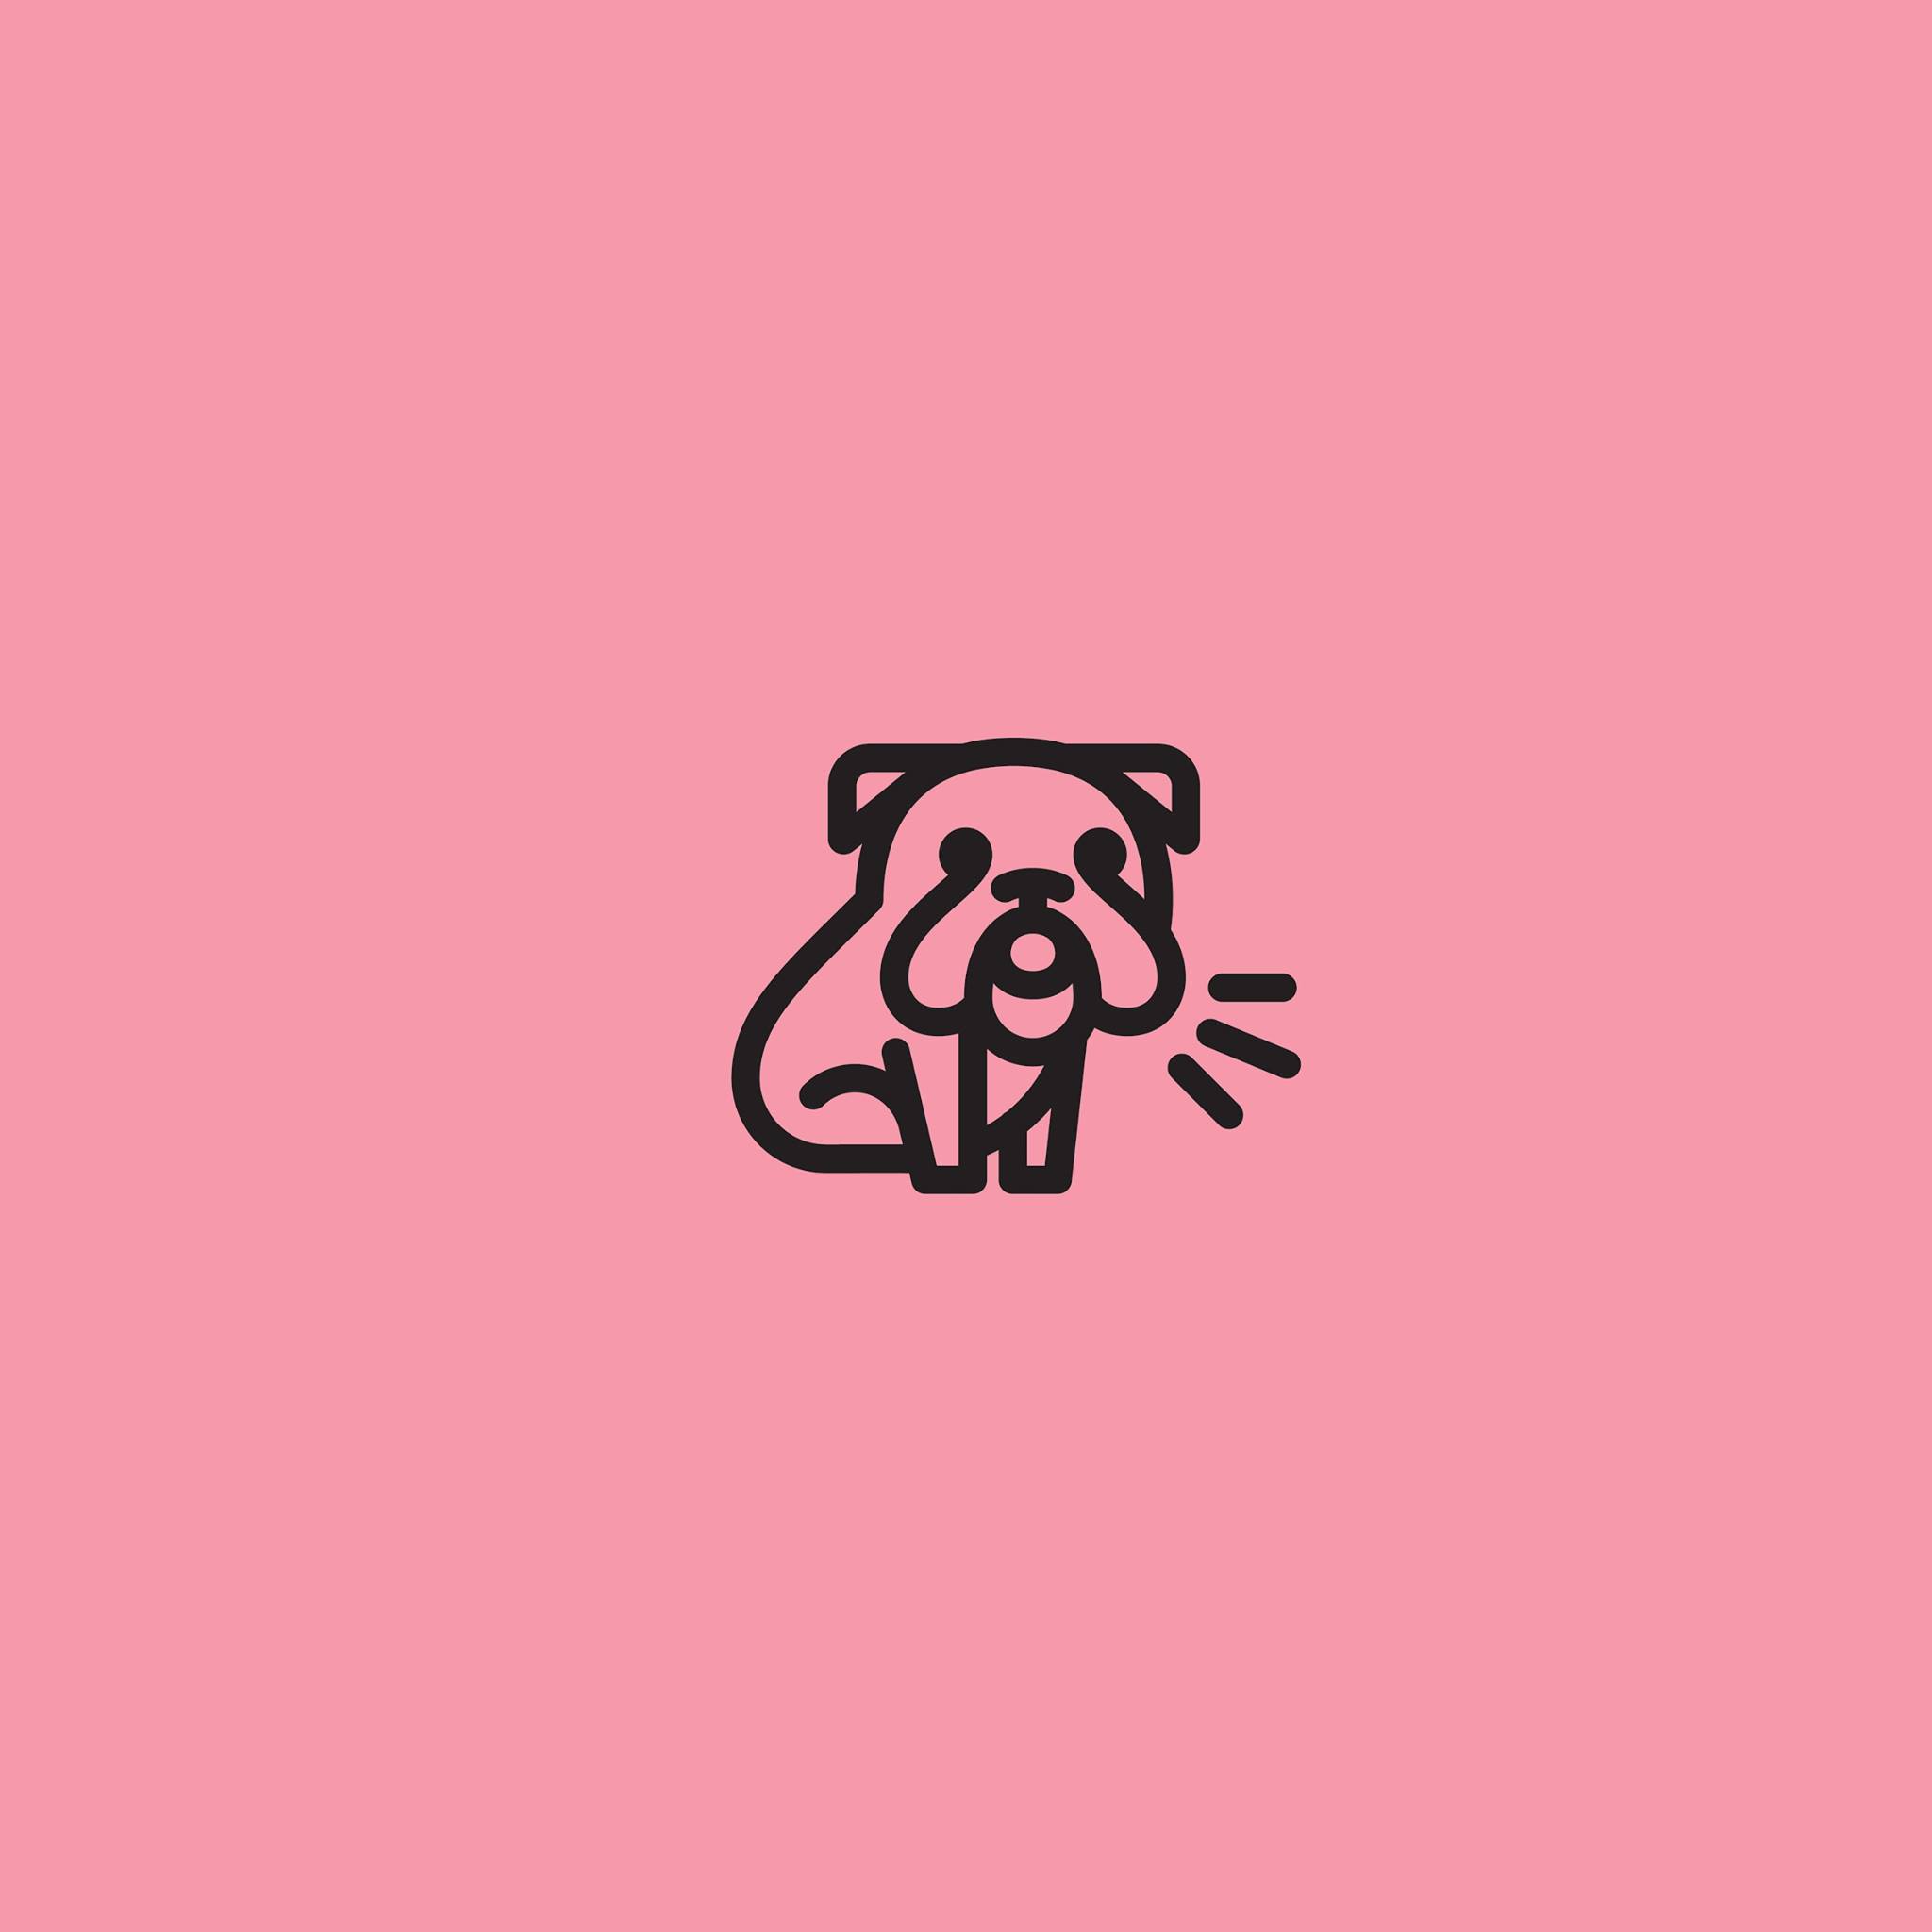 Company logo of The Good Dog